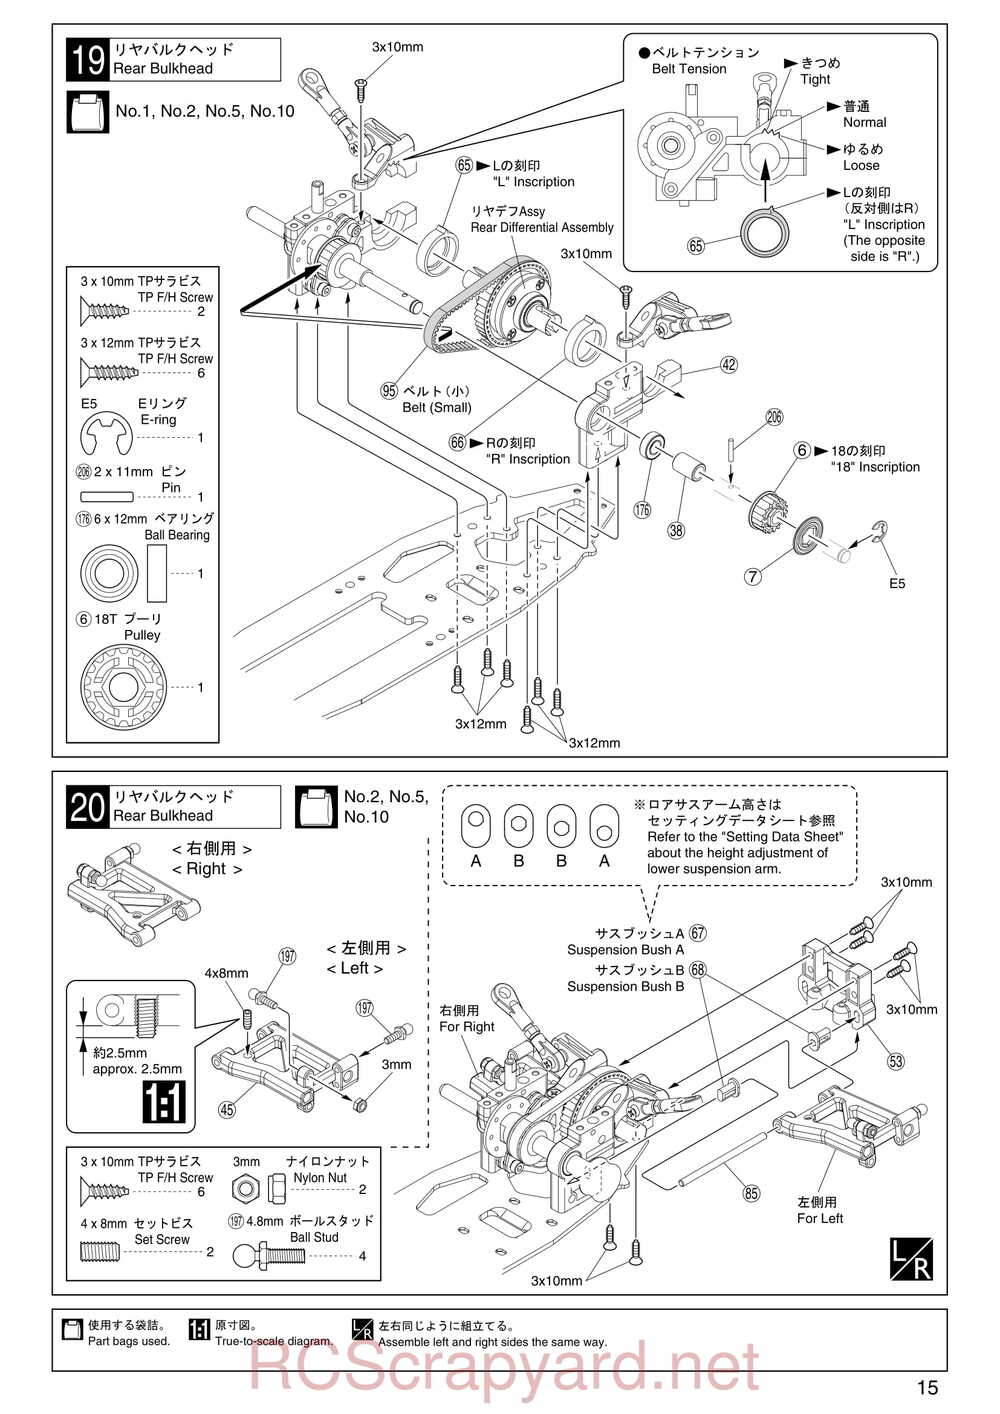 Kyosho - 31256 - V-One RRR - Manual - Page 15